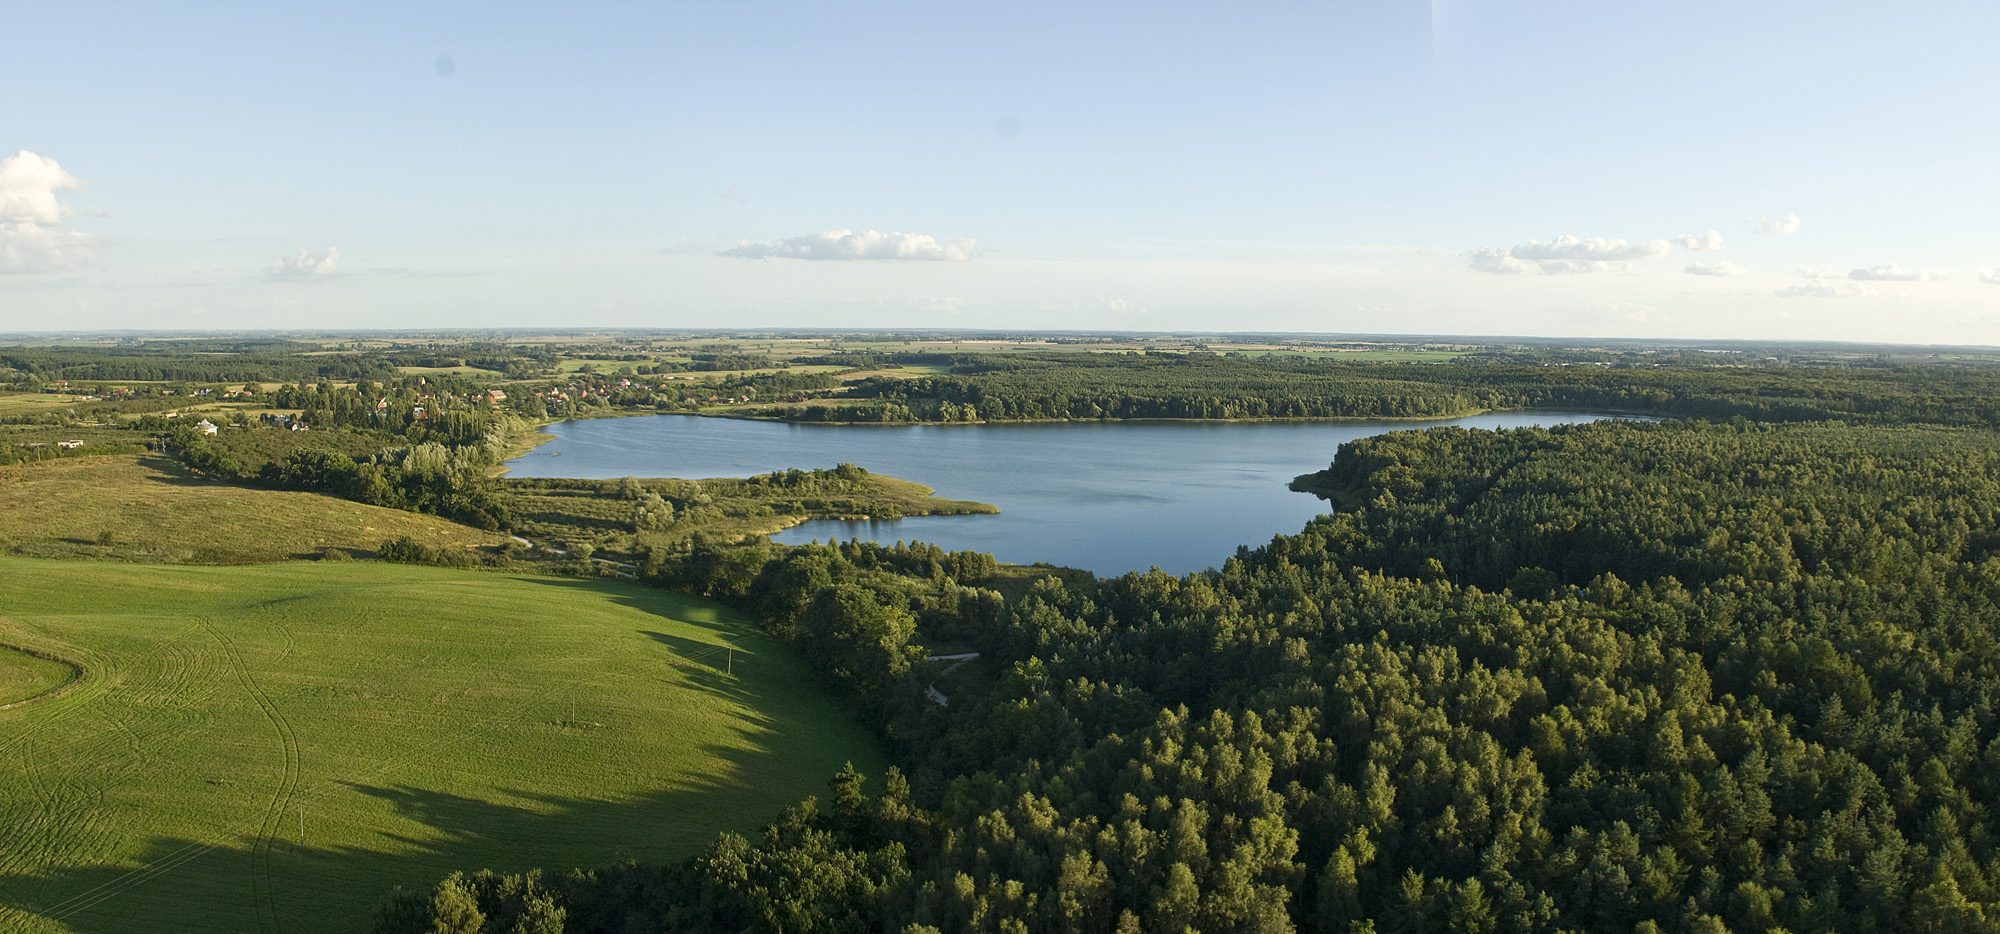 Jezioro Binowo